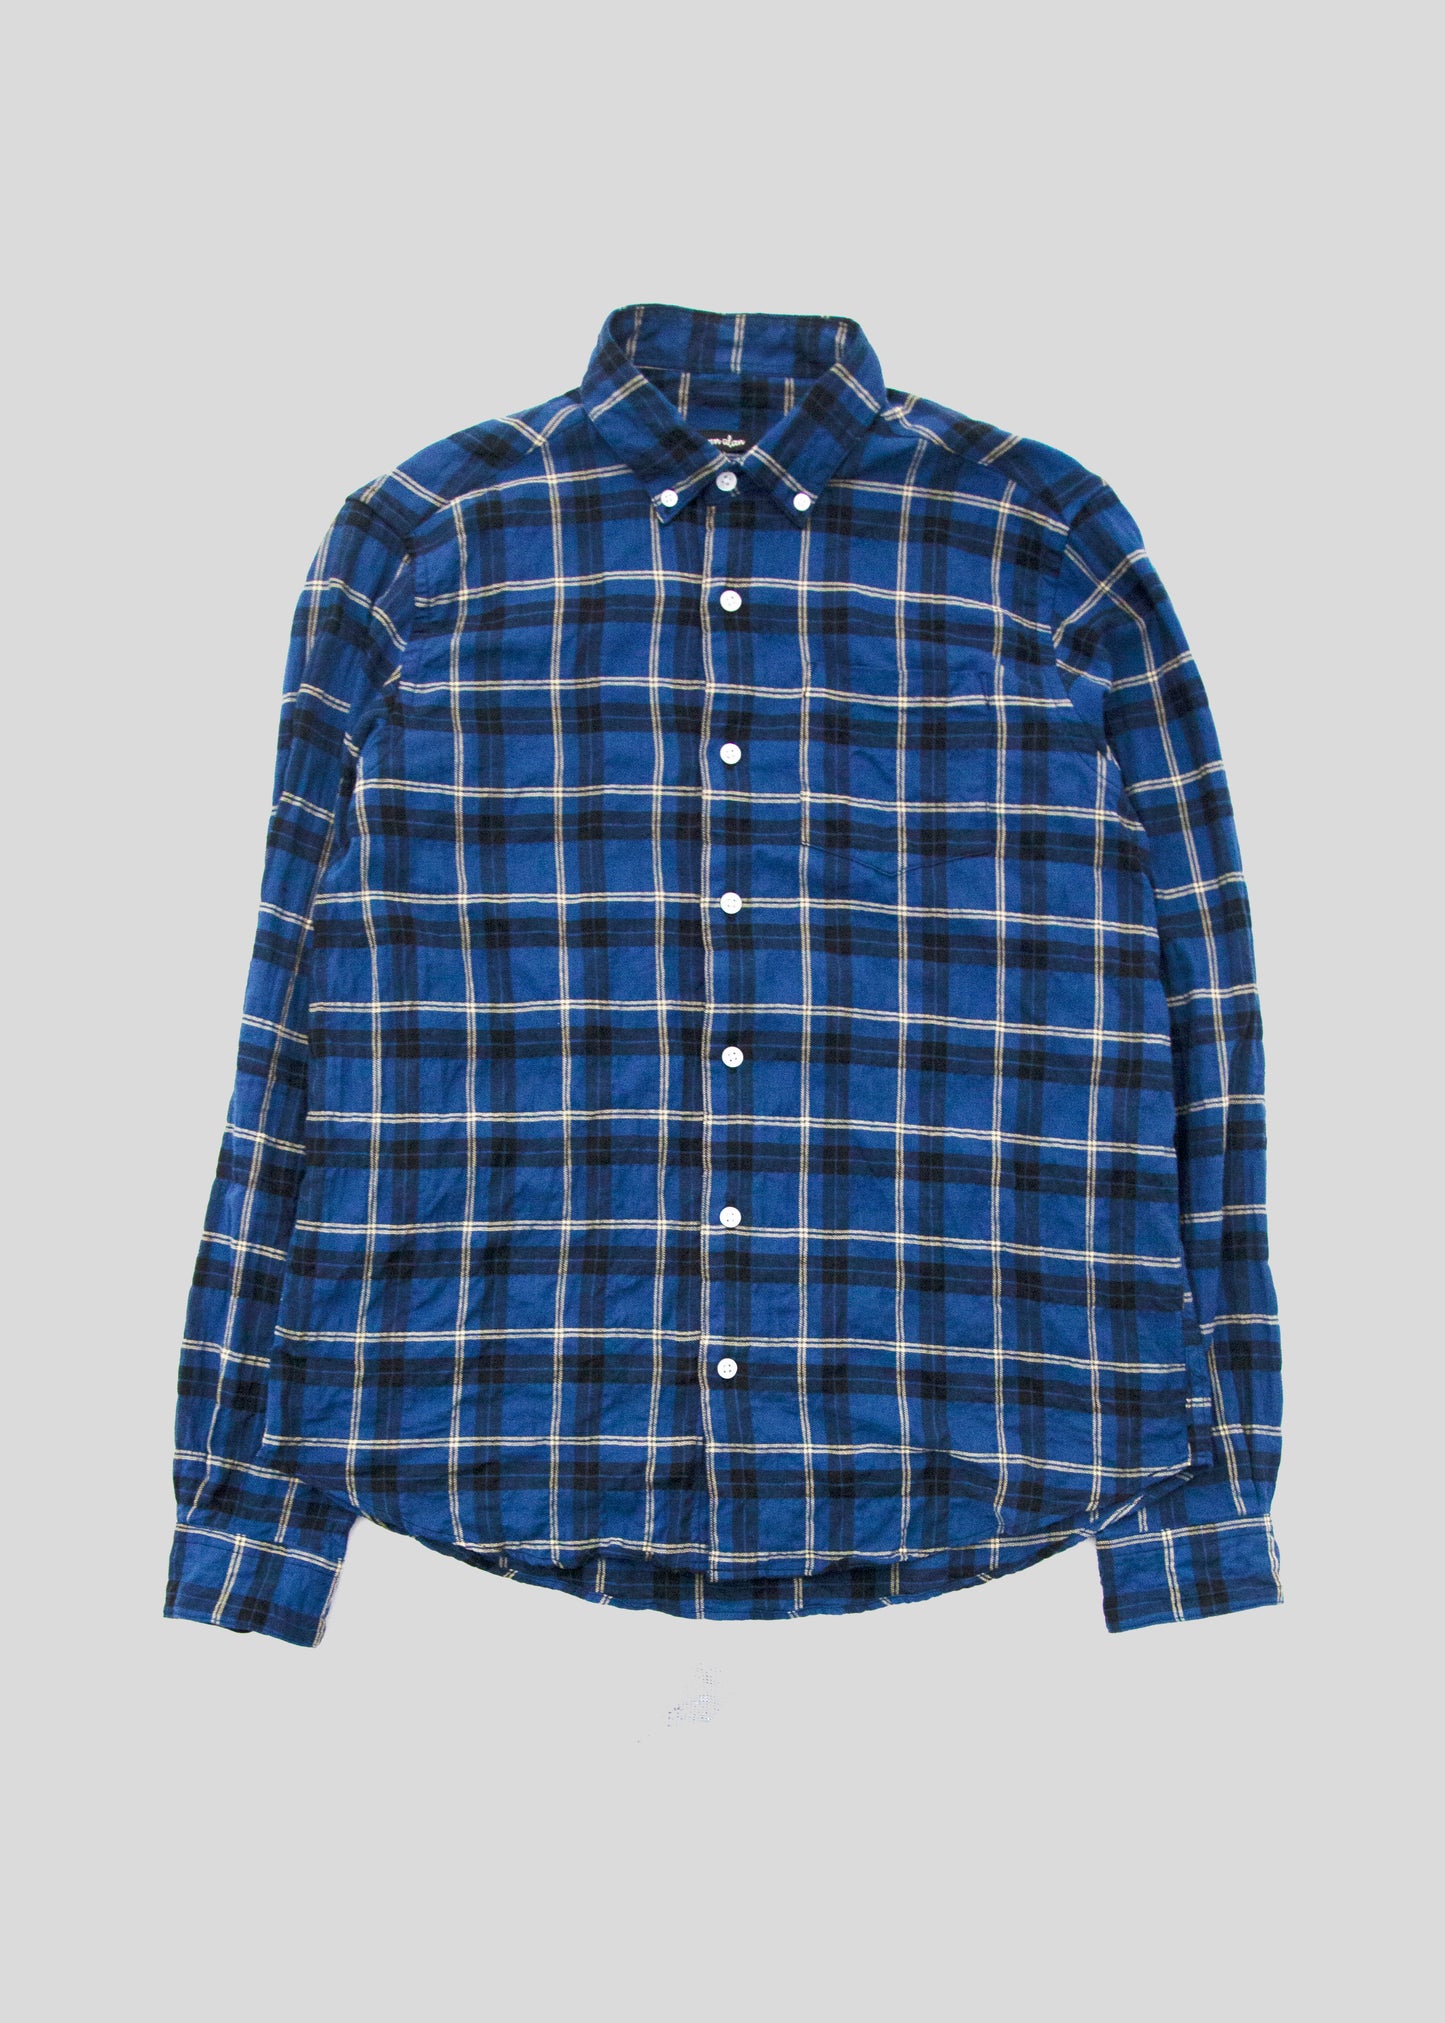 Single Needle Shirt, Blue Pucker Flannel